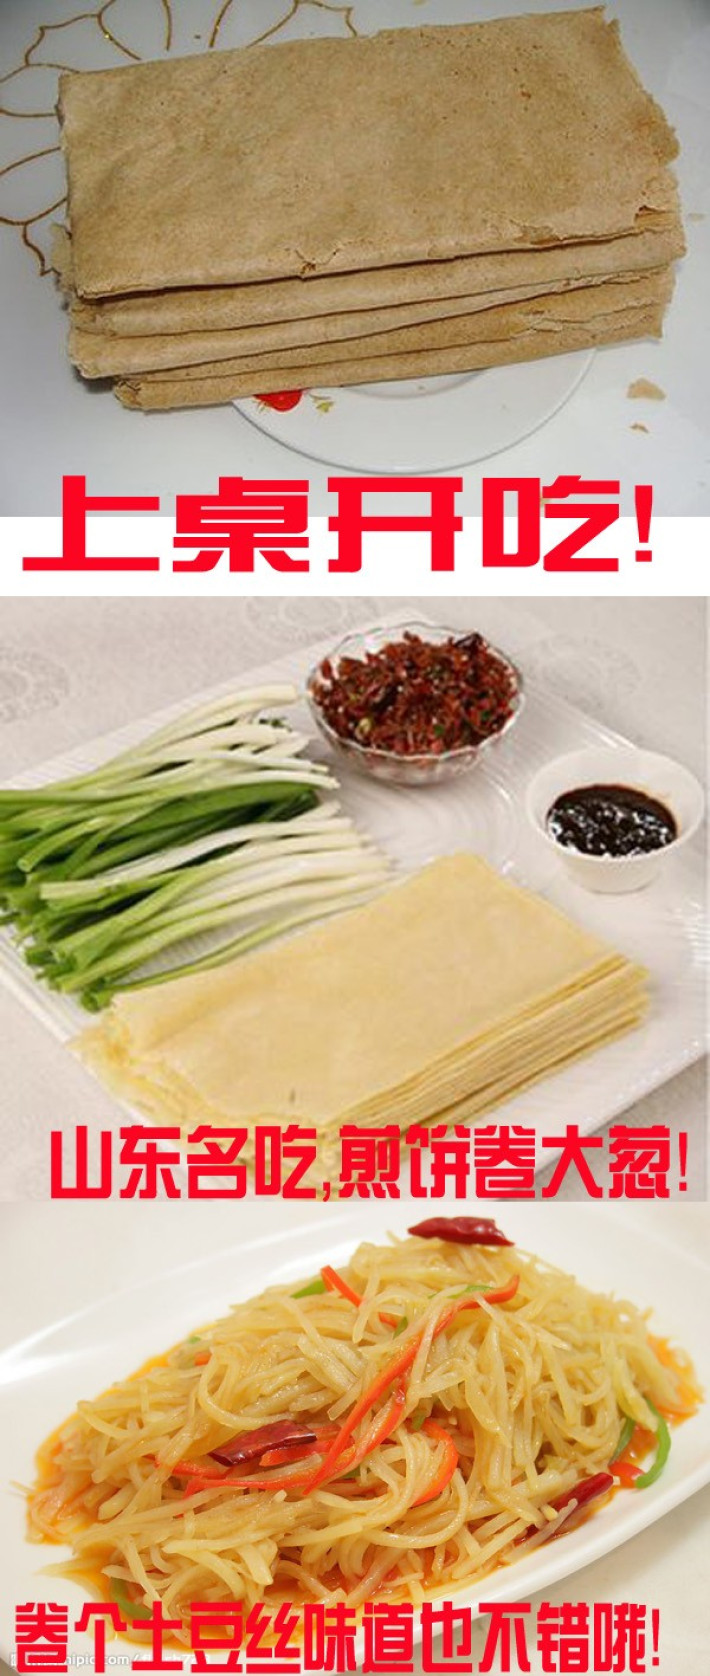 cctv舌尖上的中国(二)推荐,枣庄菜煎饼专用煎饼